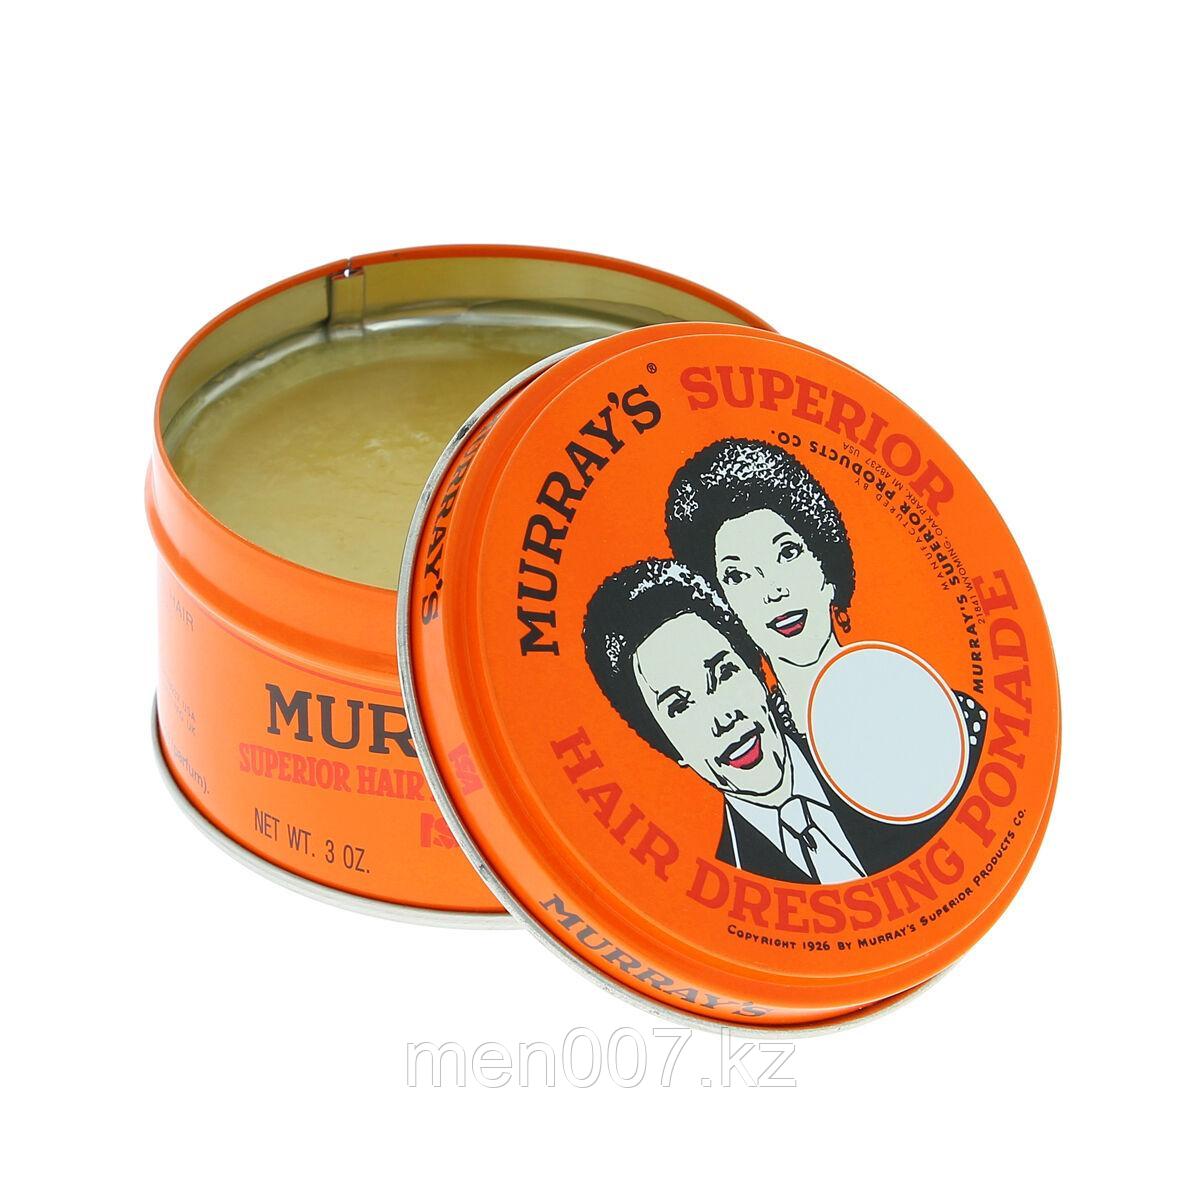 Murray's Original Pomade (помада для укладки волос) 85 грамма